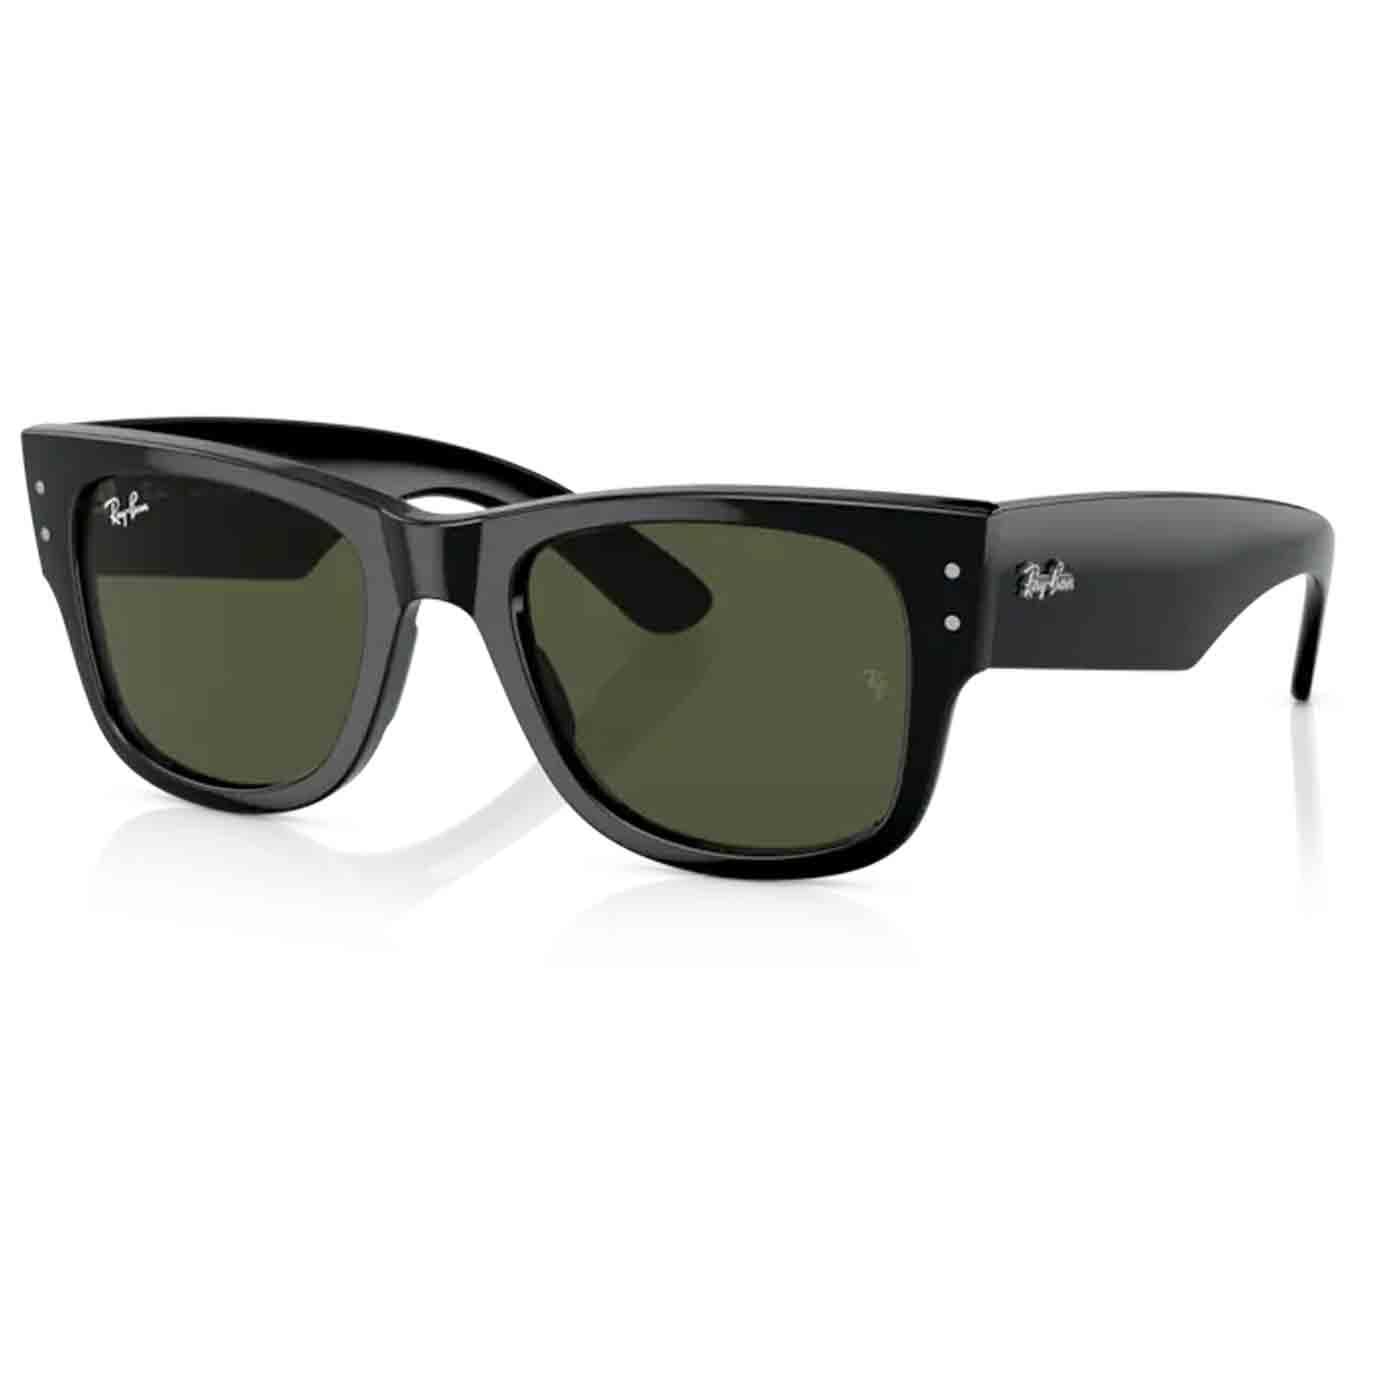 Mega Wayfarer RAY-BAN Retro 60s Sunglasses (Black)